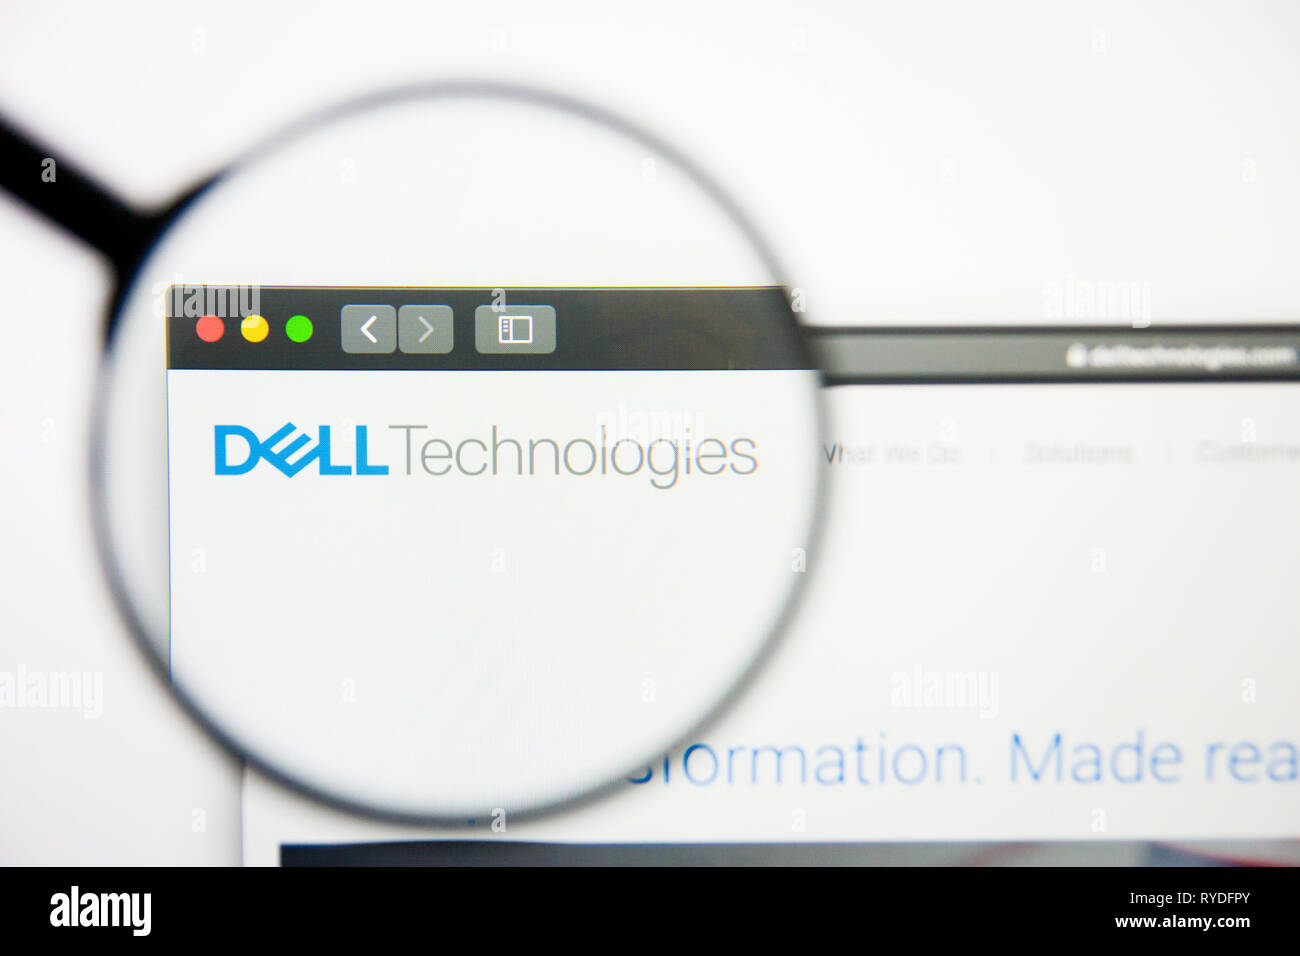 Los Angeles, Kalifornien, USA - 5. März 2019: Dell Technologien Homepage. Dell Technologien Logo sichtbar auf dem Display, Illustrative Stockfoto